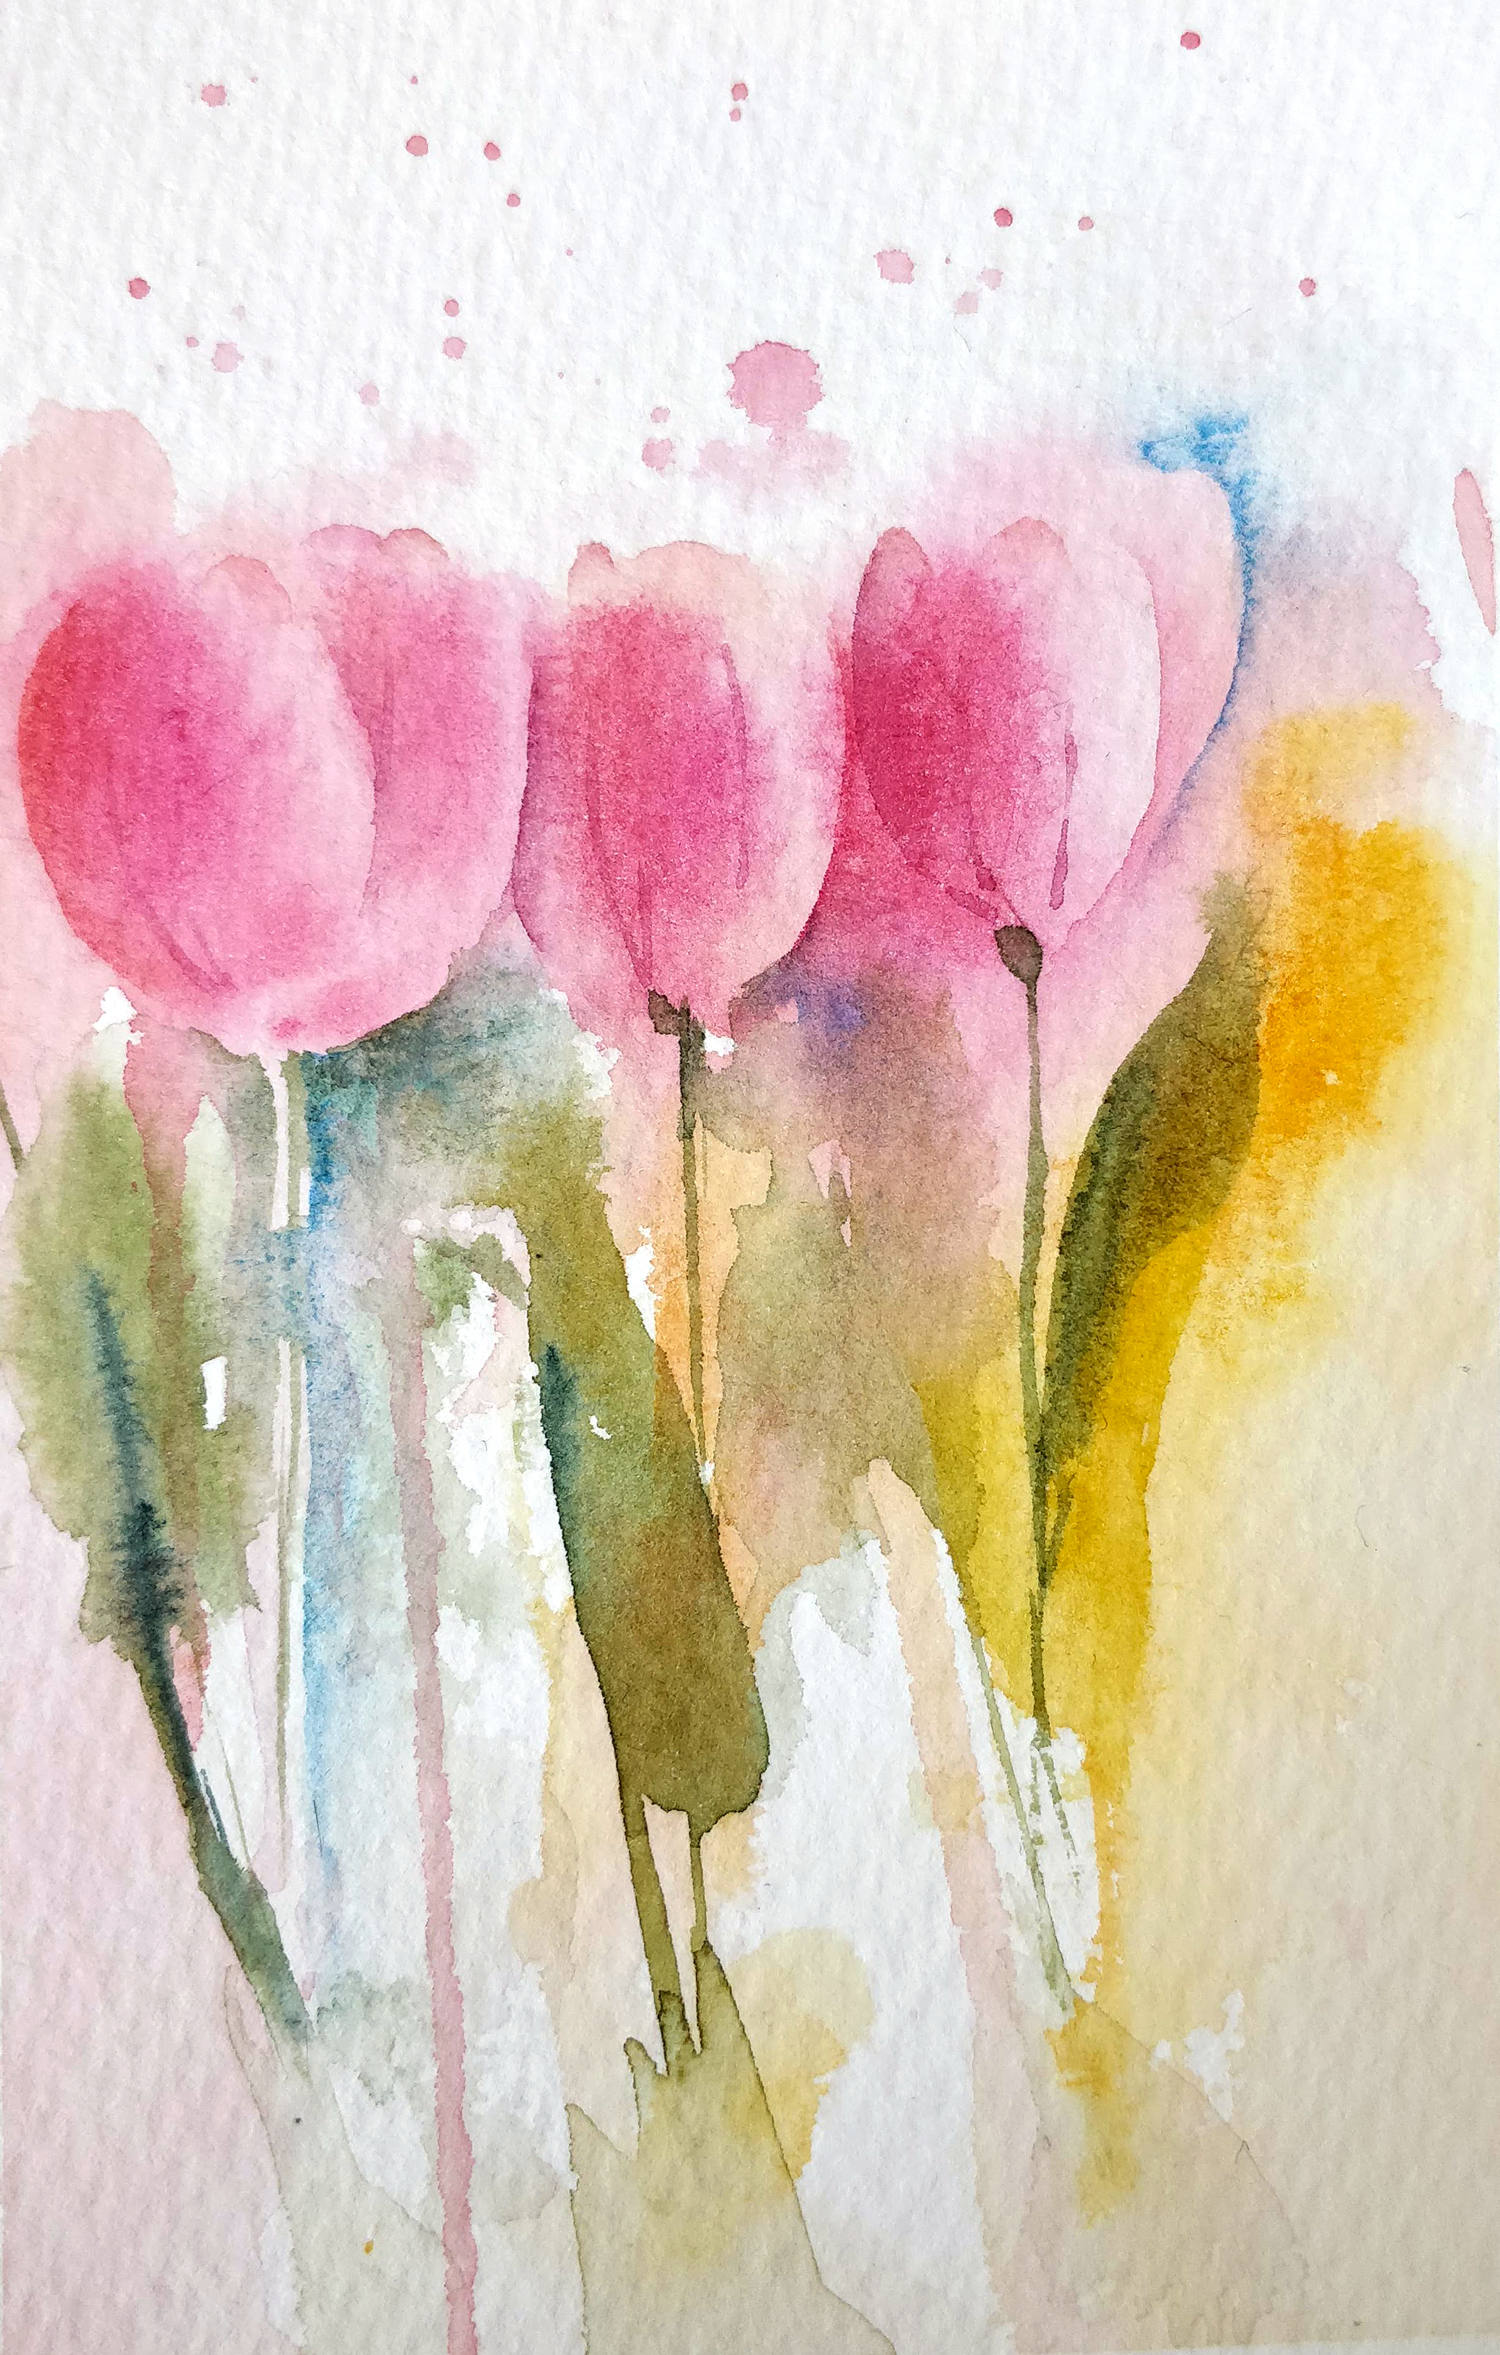 White flowers in watercolor - Ursula Schichan